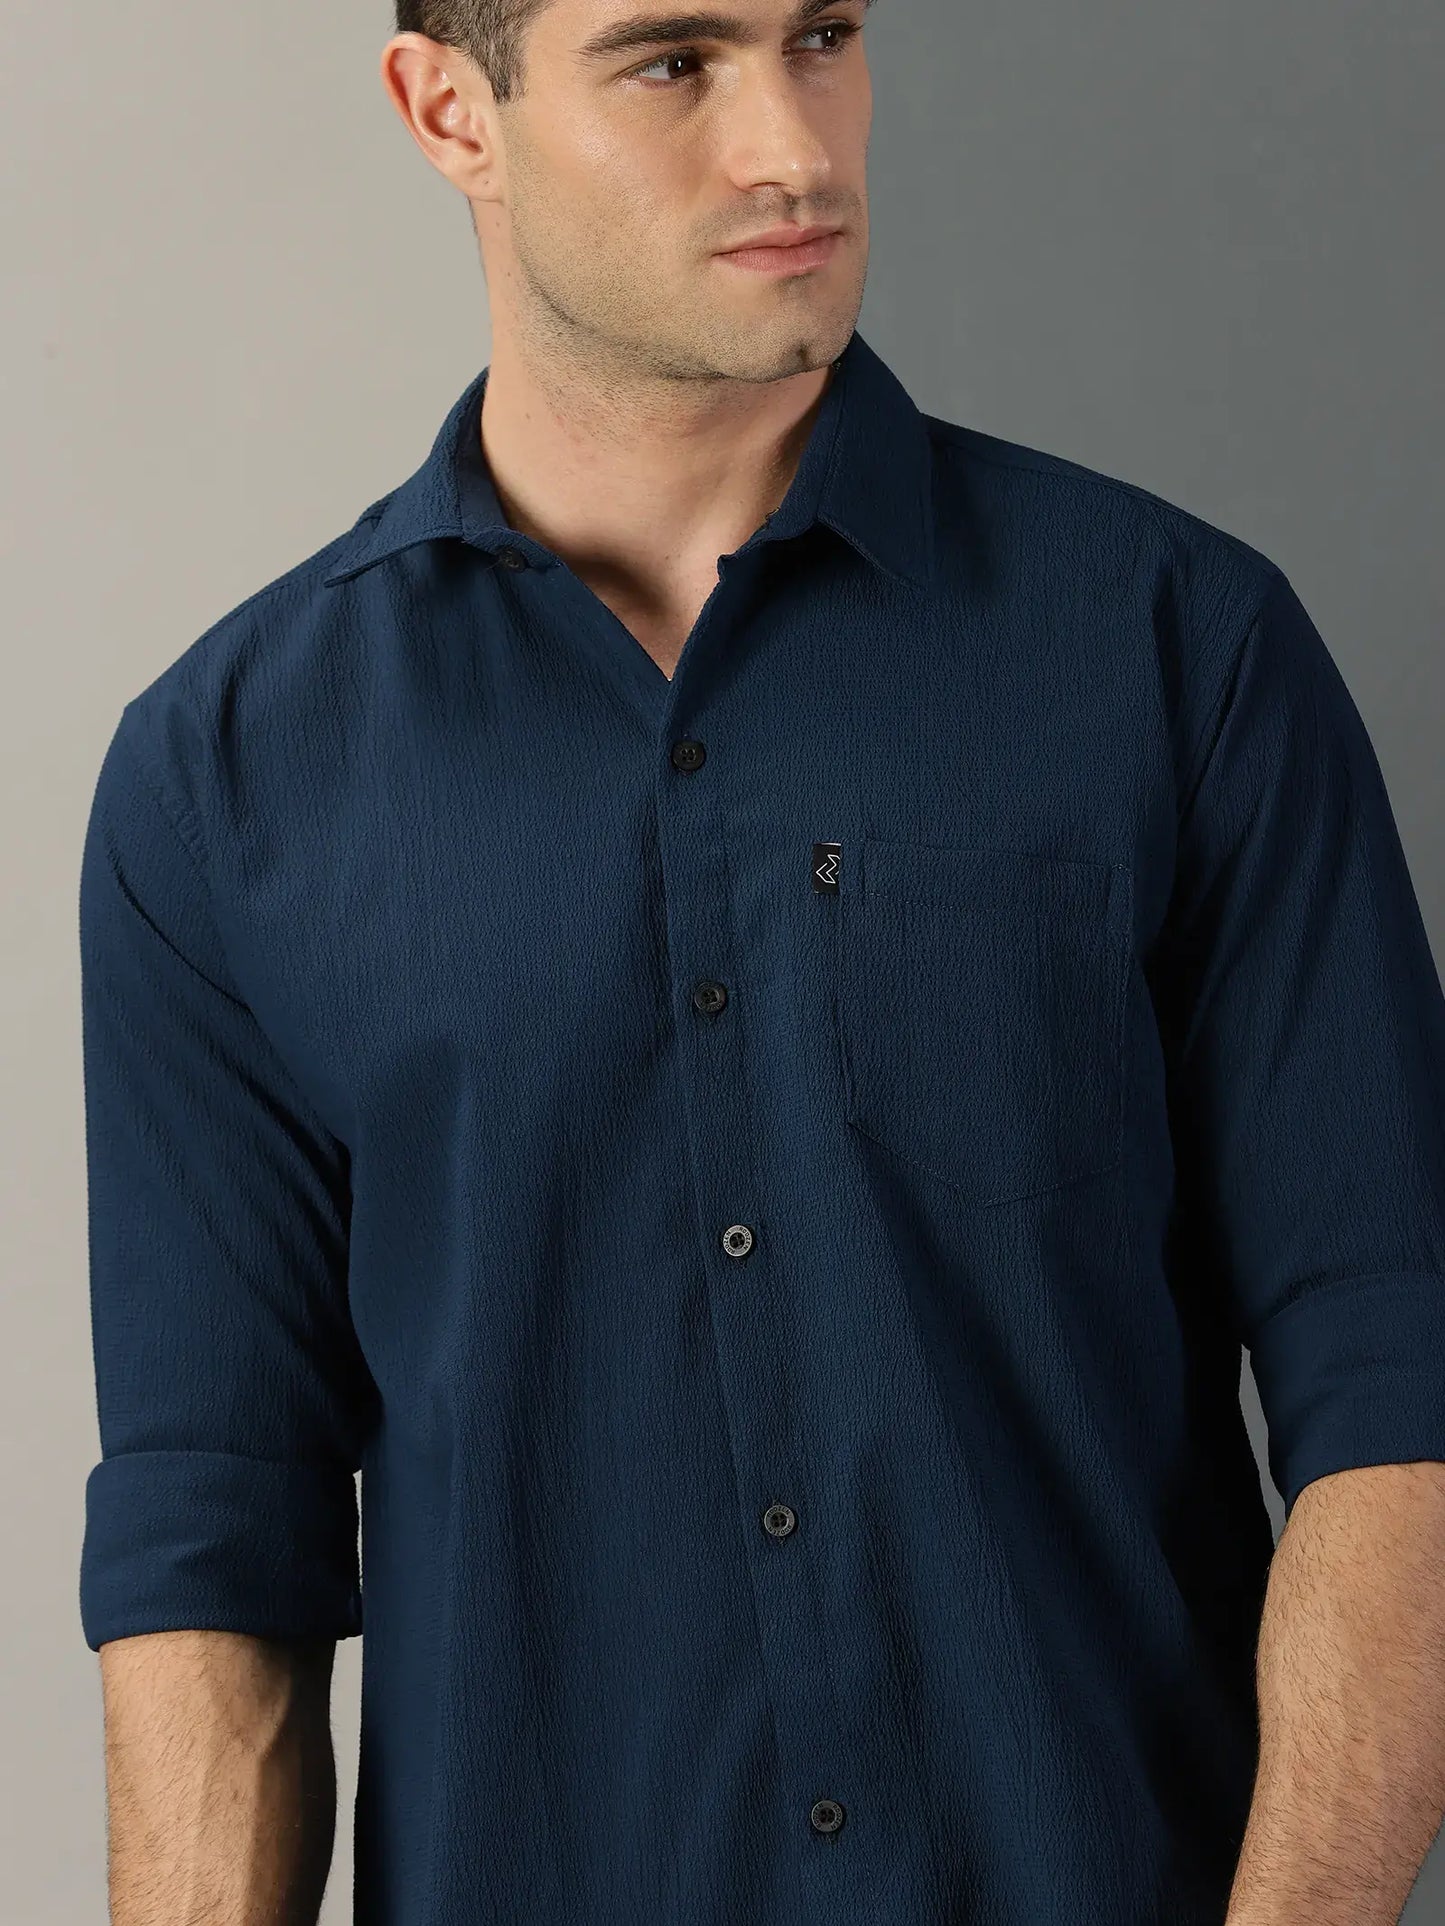 Navy Textured Full Sleeve Men's Shirt